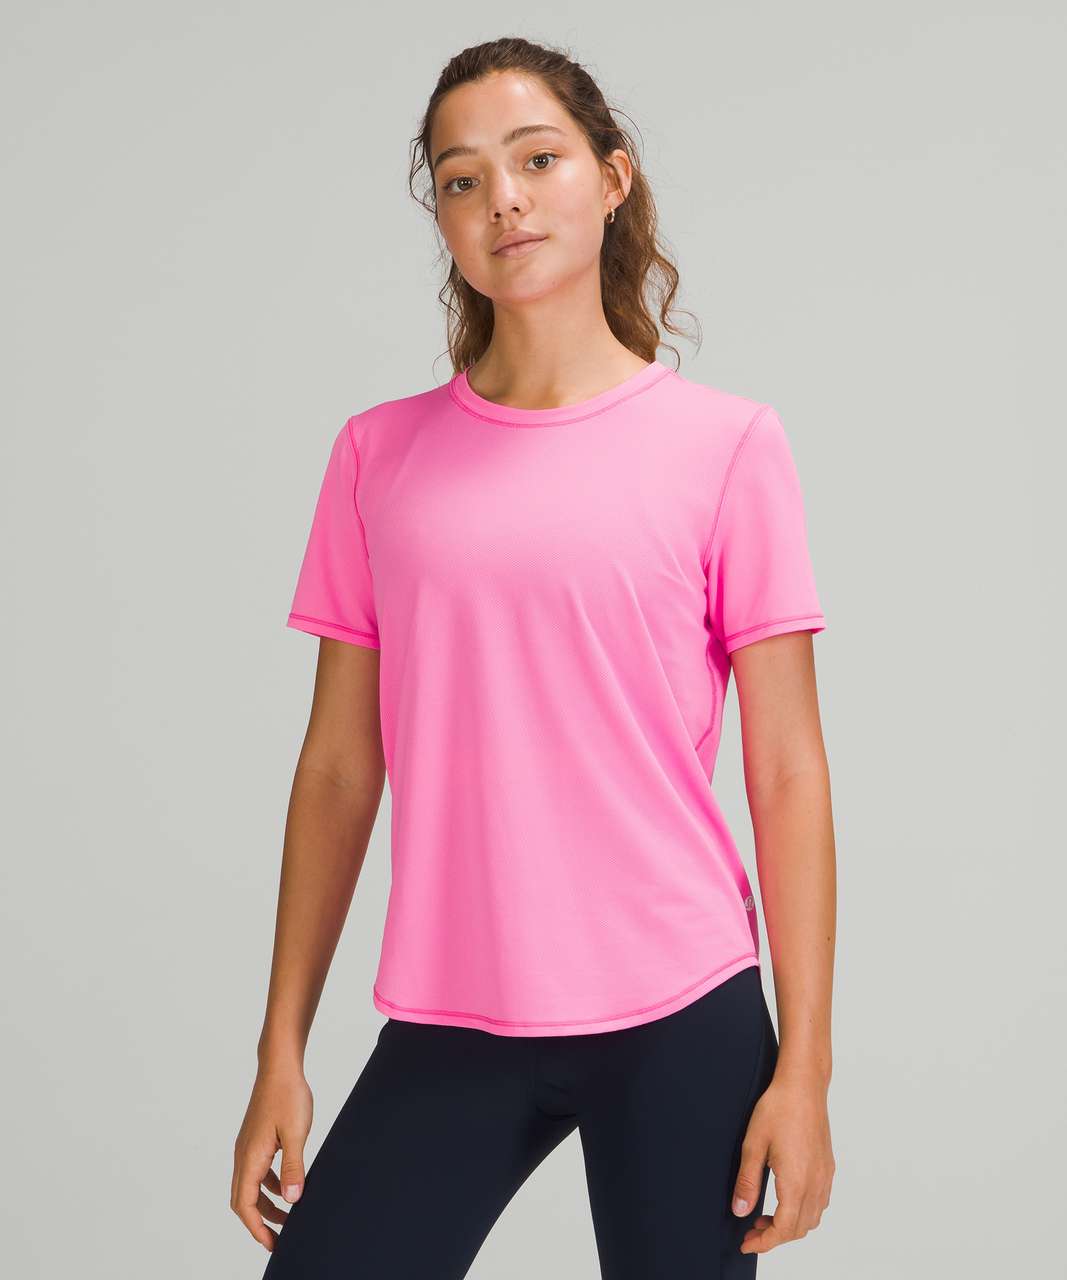 Lululemon High Neck Running and Training T-Shirt - Pow Pink Light